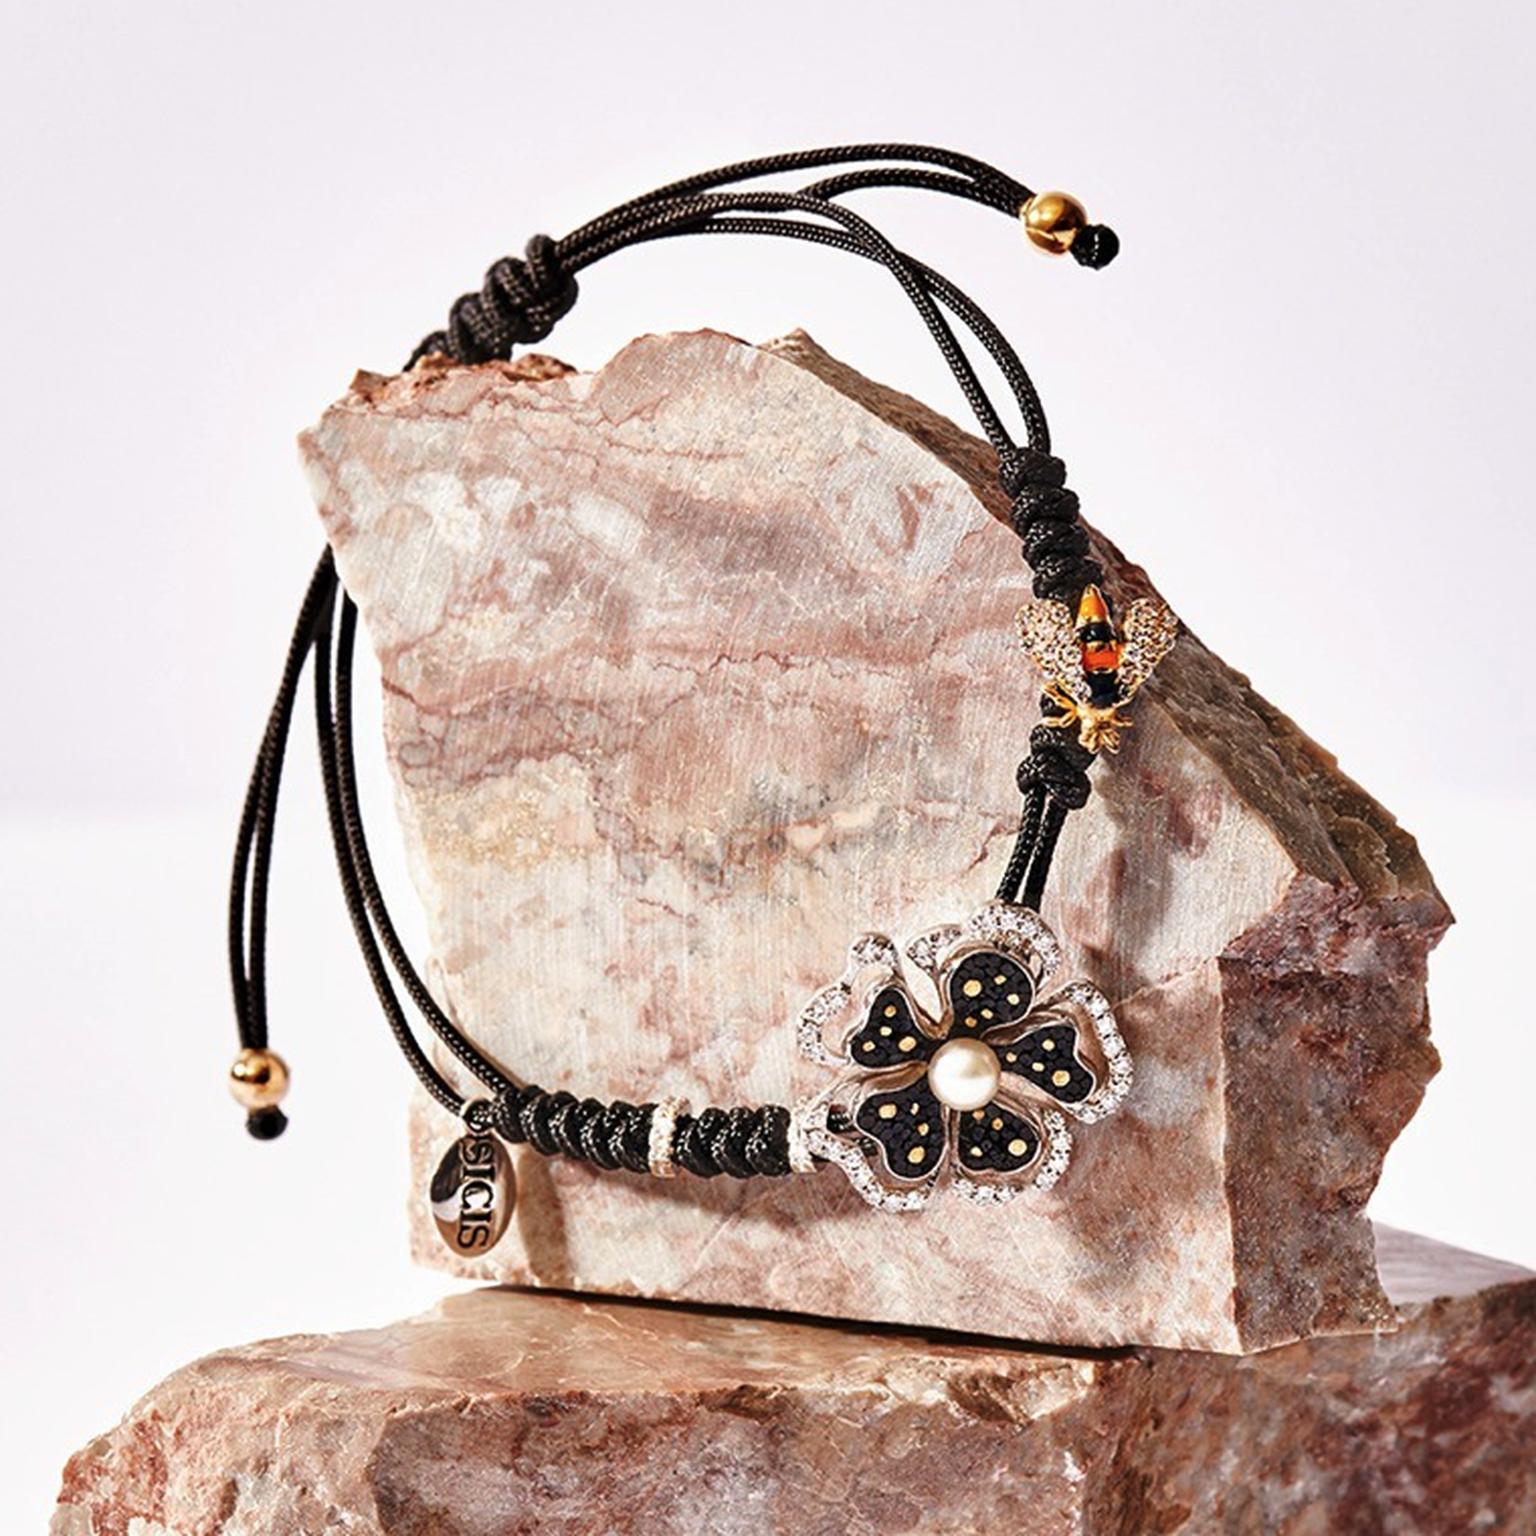 Bracelet by Sicis on stones